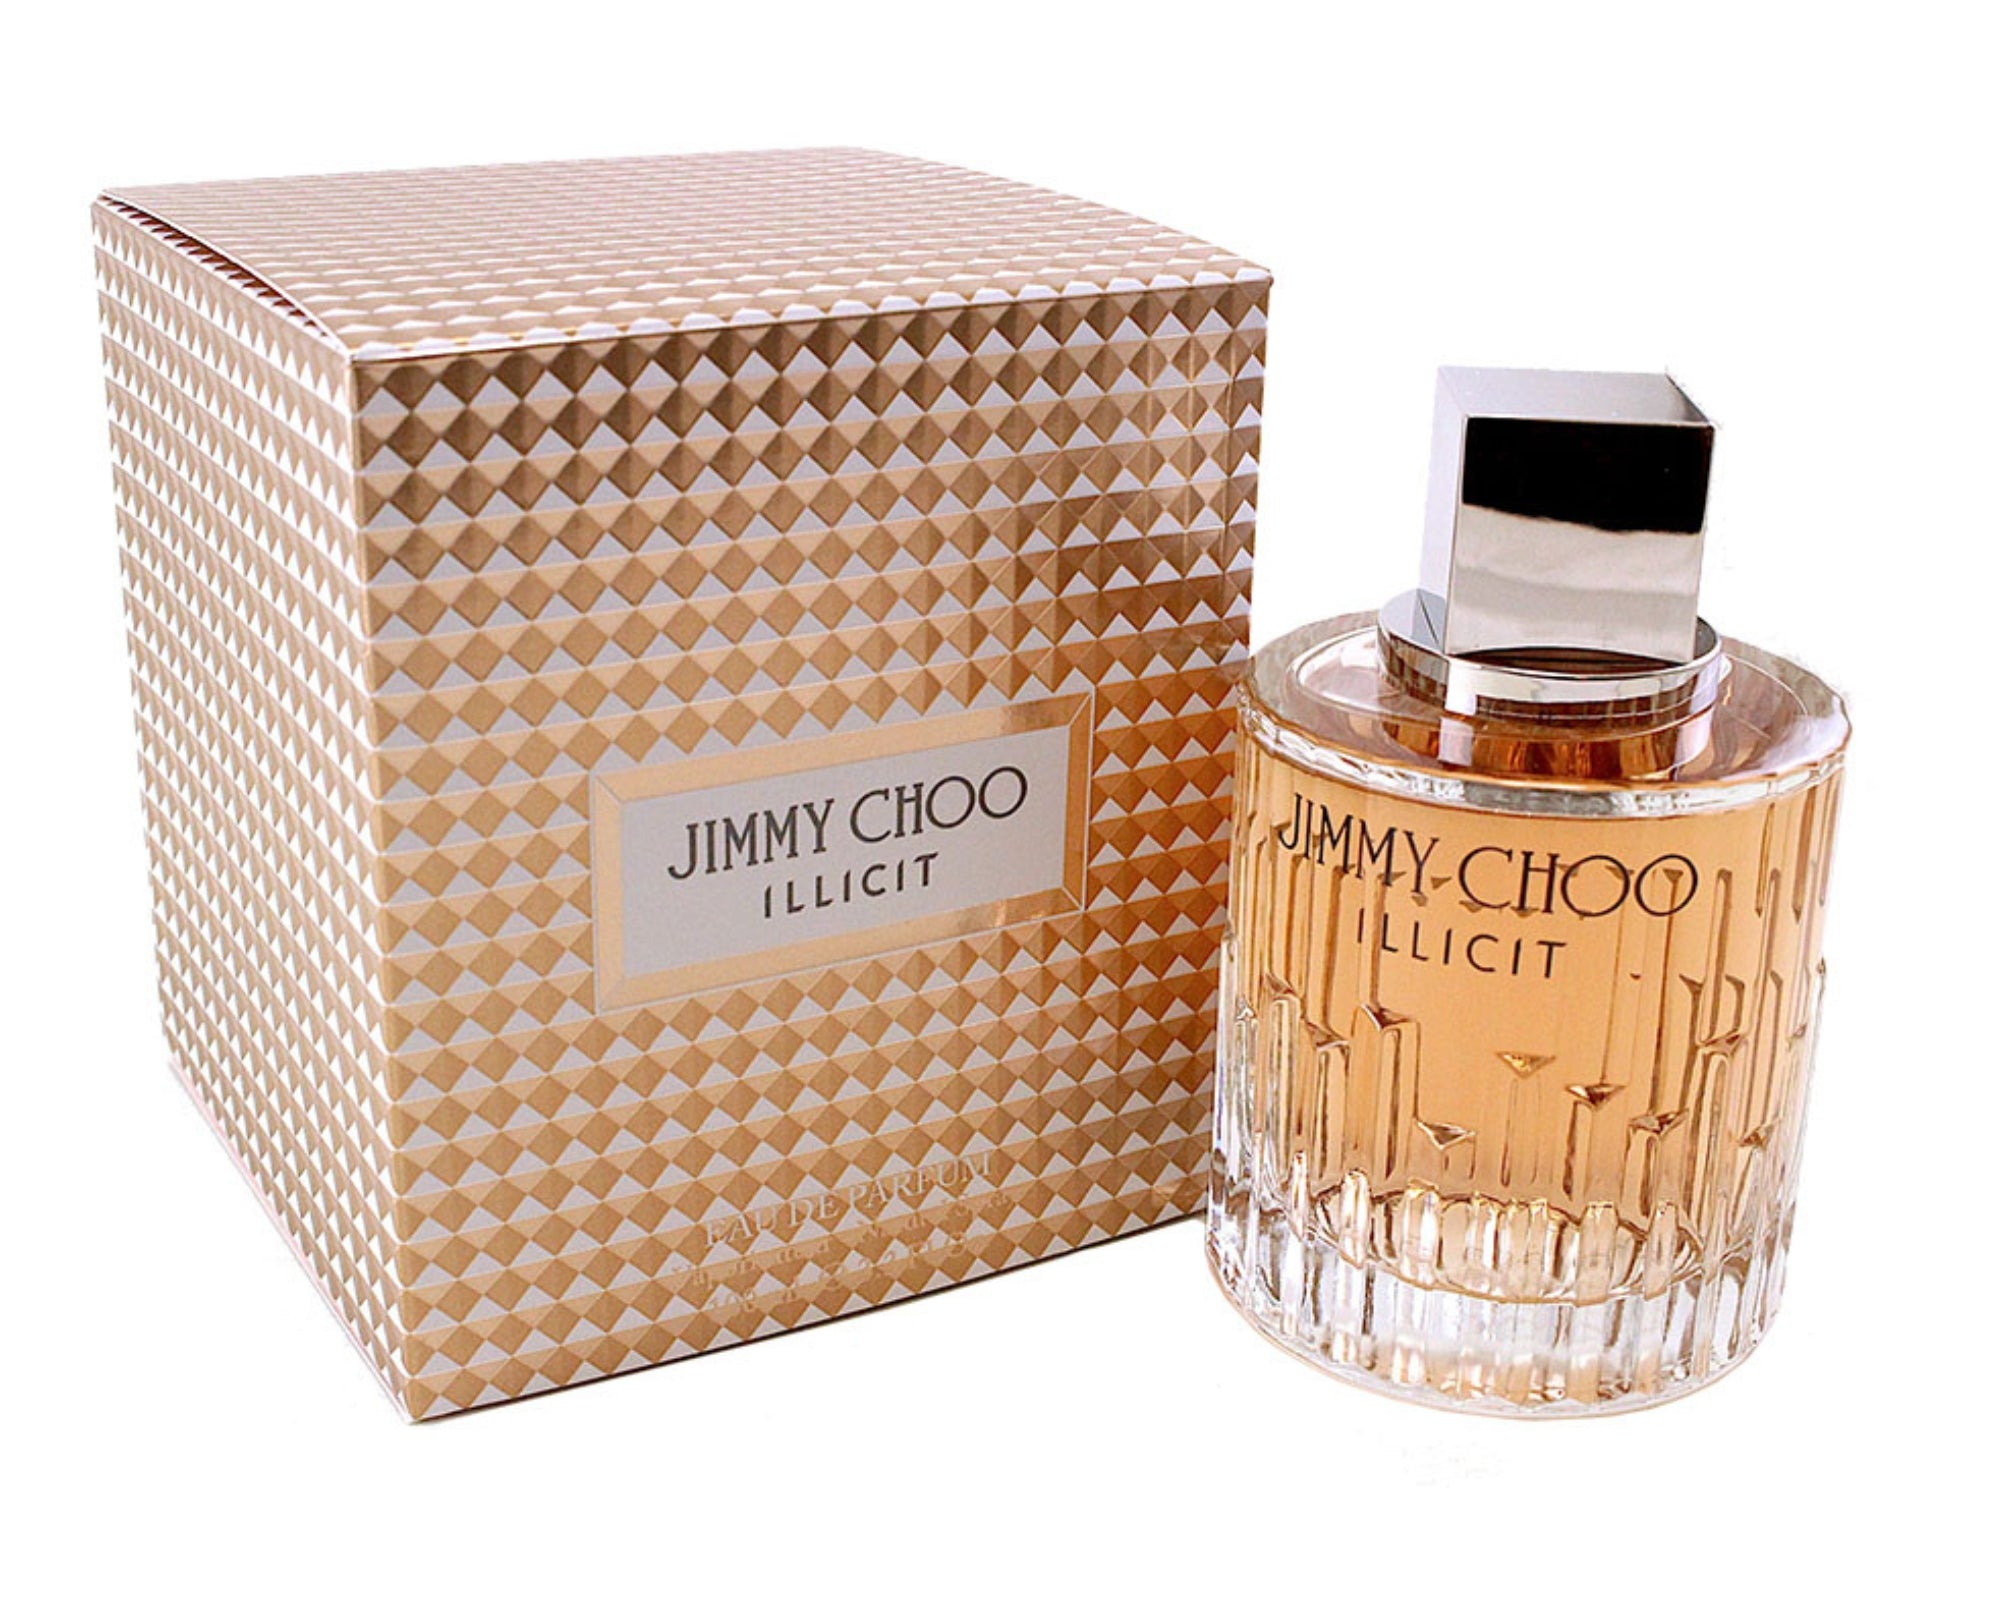 Jimmy Choo Illicit Perfume Eau De Parfum by Jimmy Choo